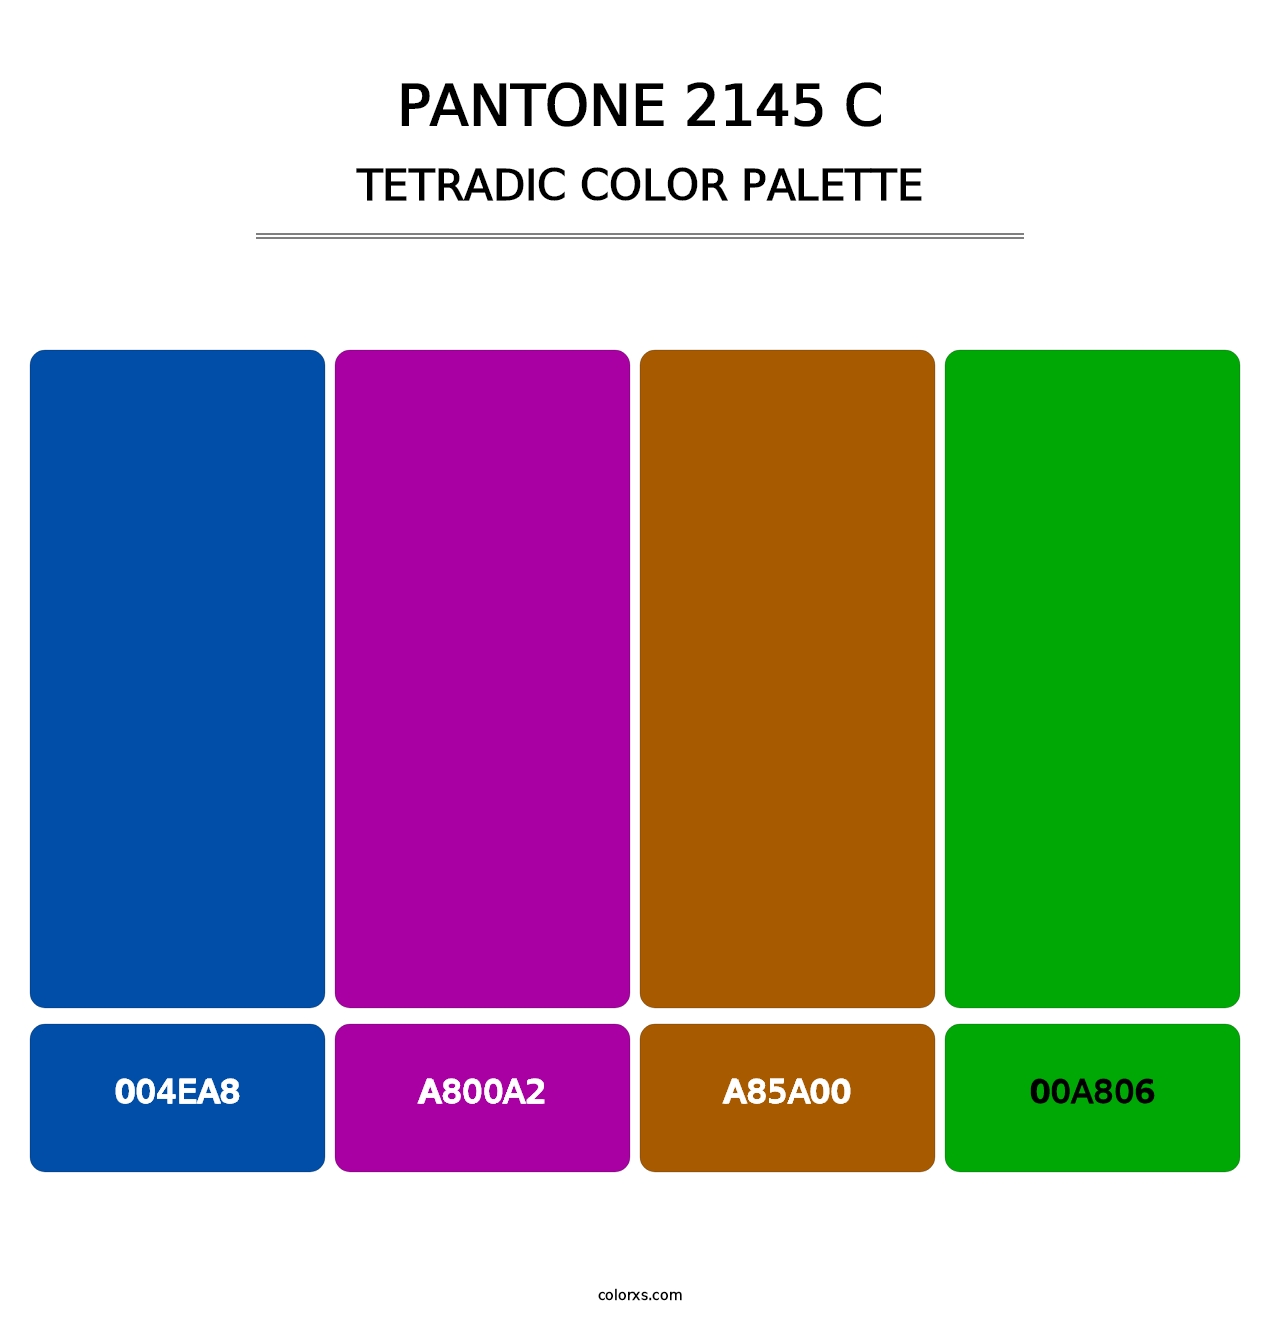 PANTONE 2145 C - Tetradic Color Palette